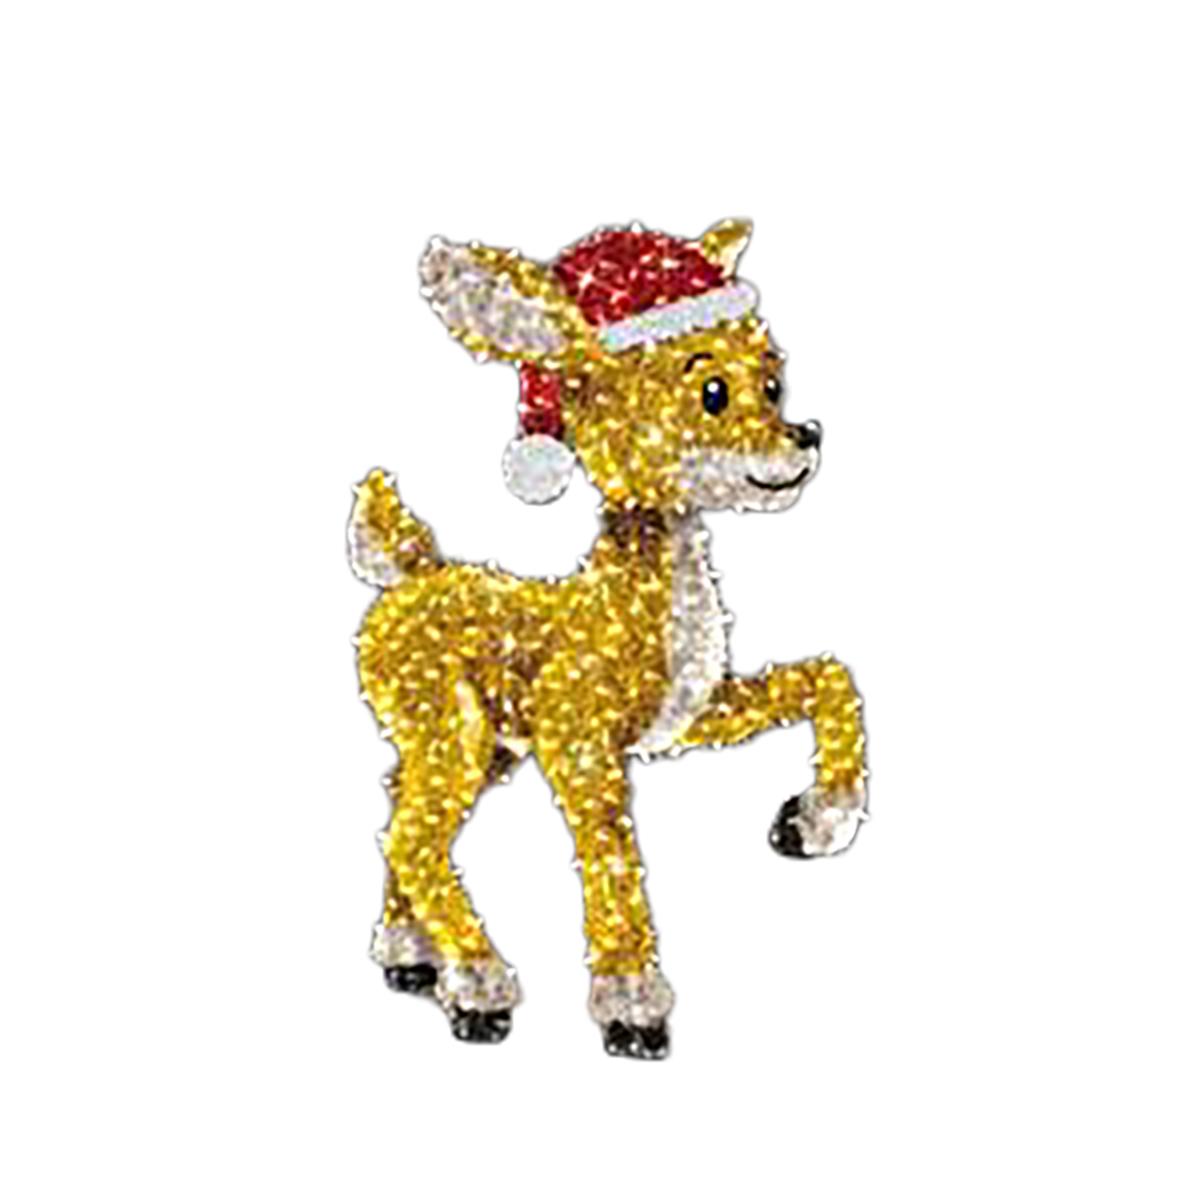 3D Cartoon Deer - Christmas Display - Multi-Color LED Lights - 7ft tall